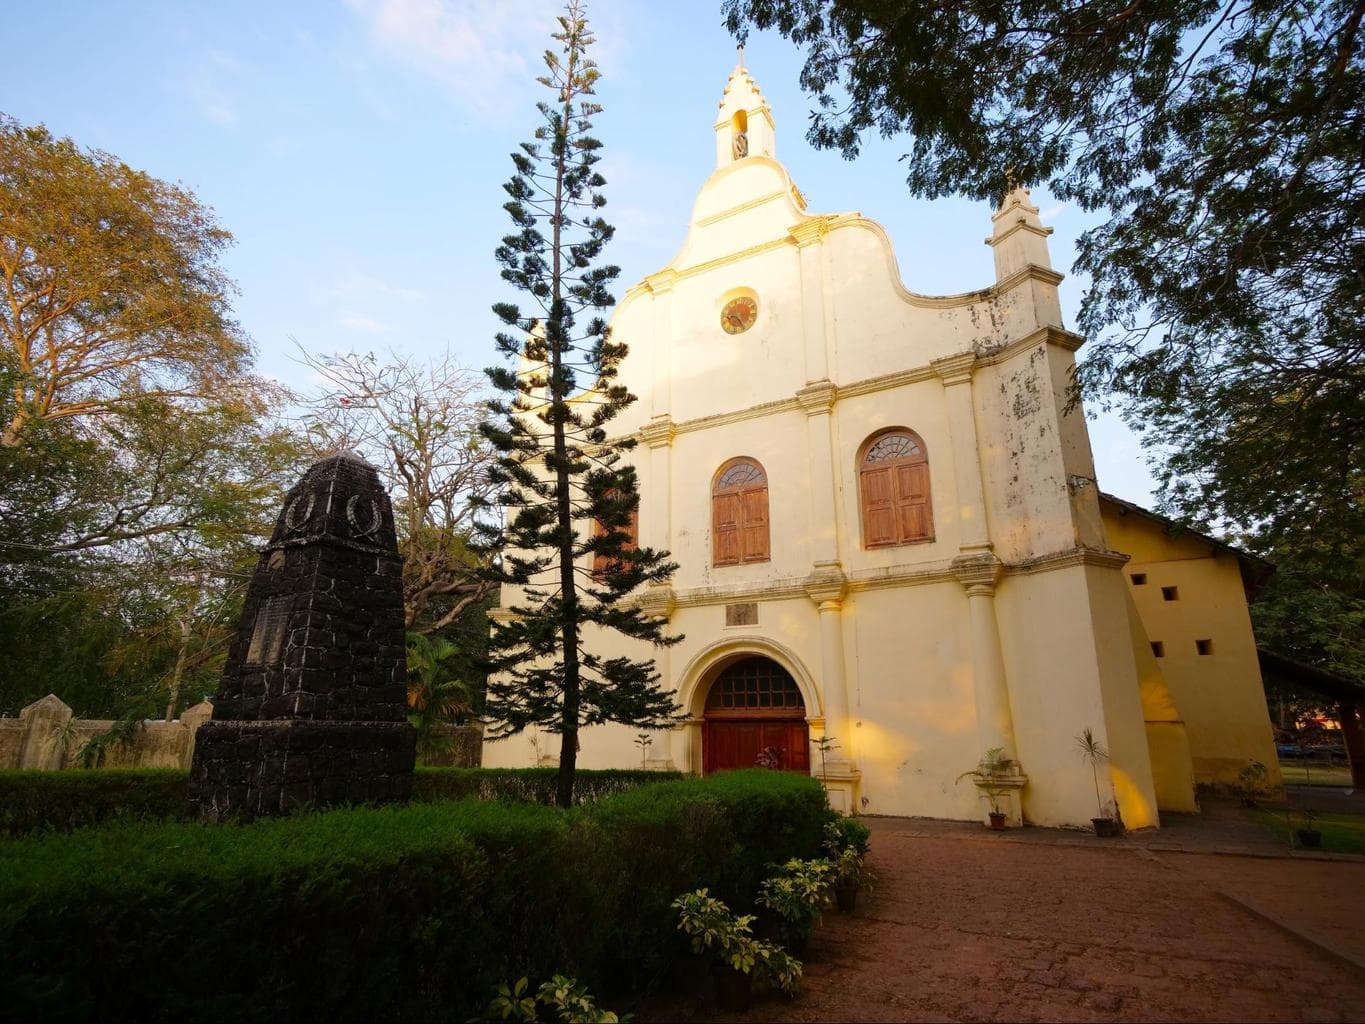 St. Francis Church in Fort Kochi